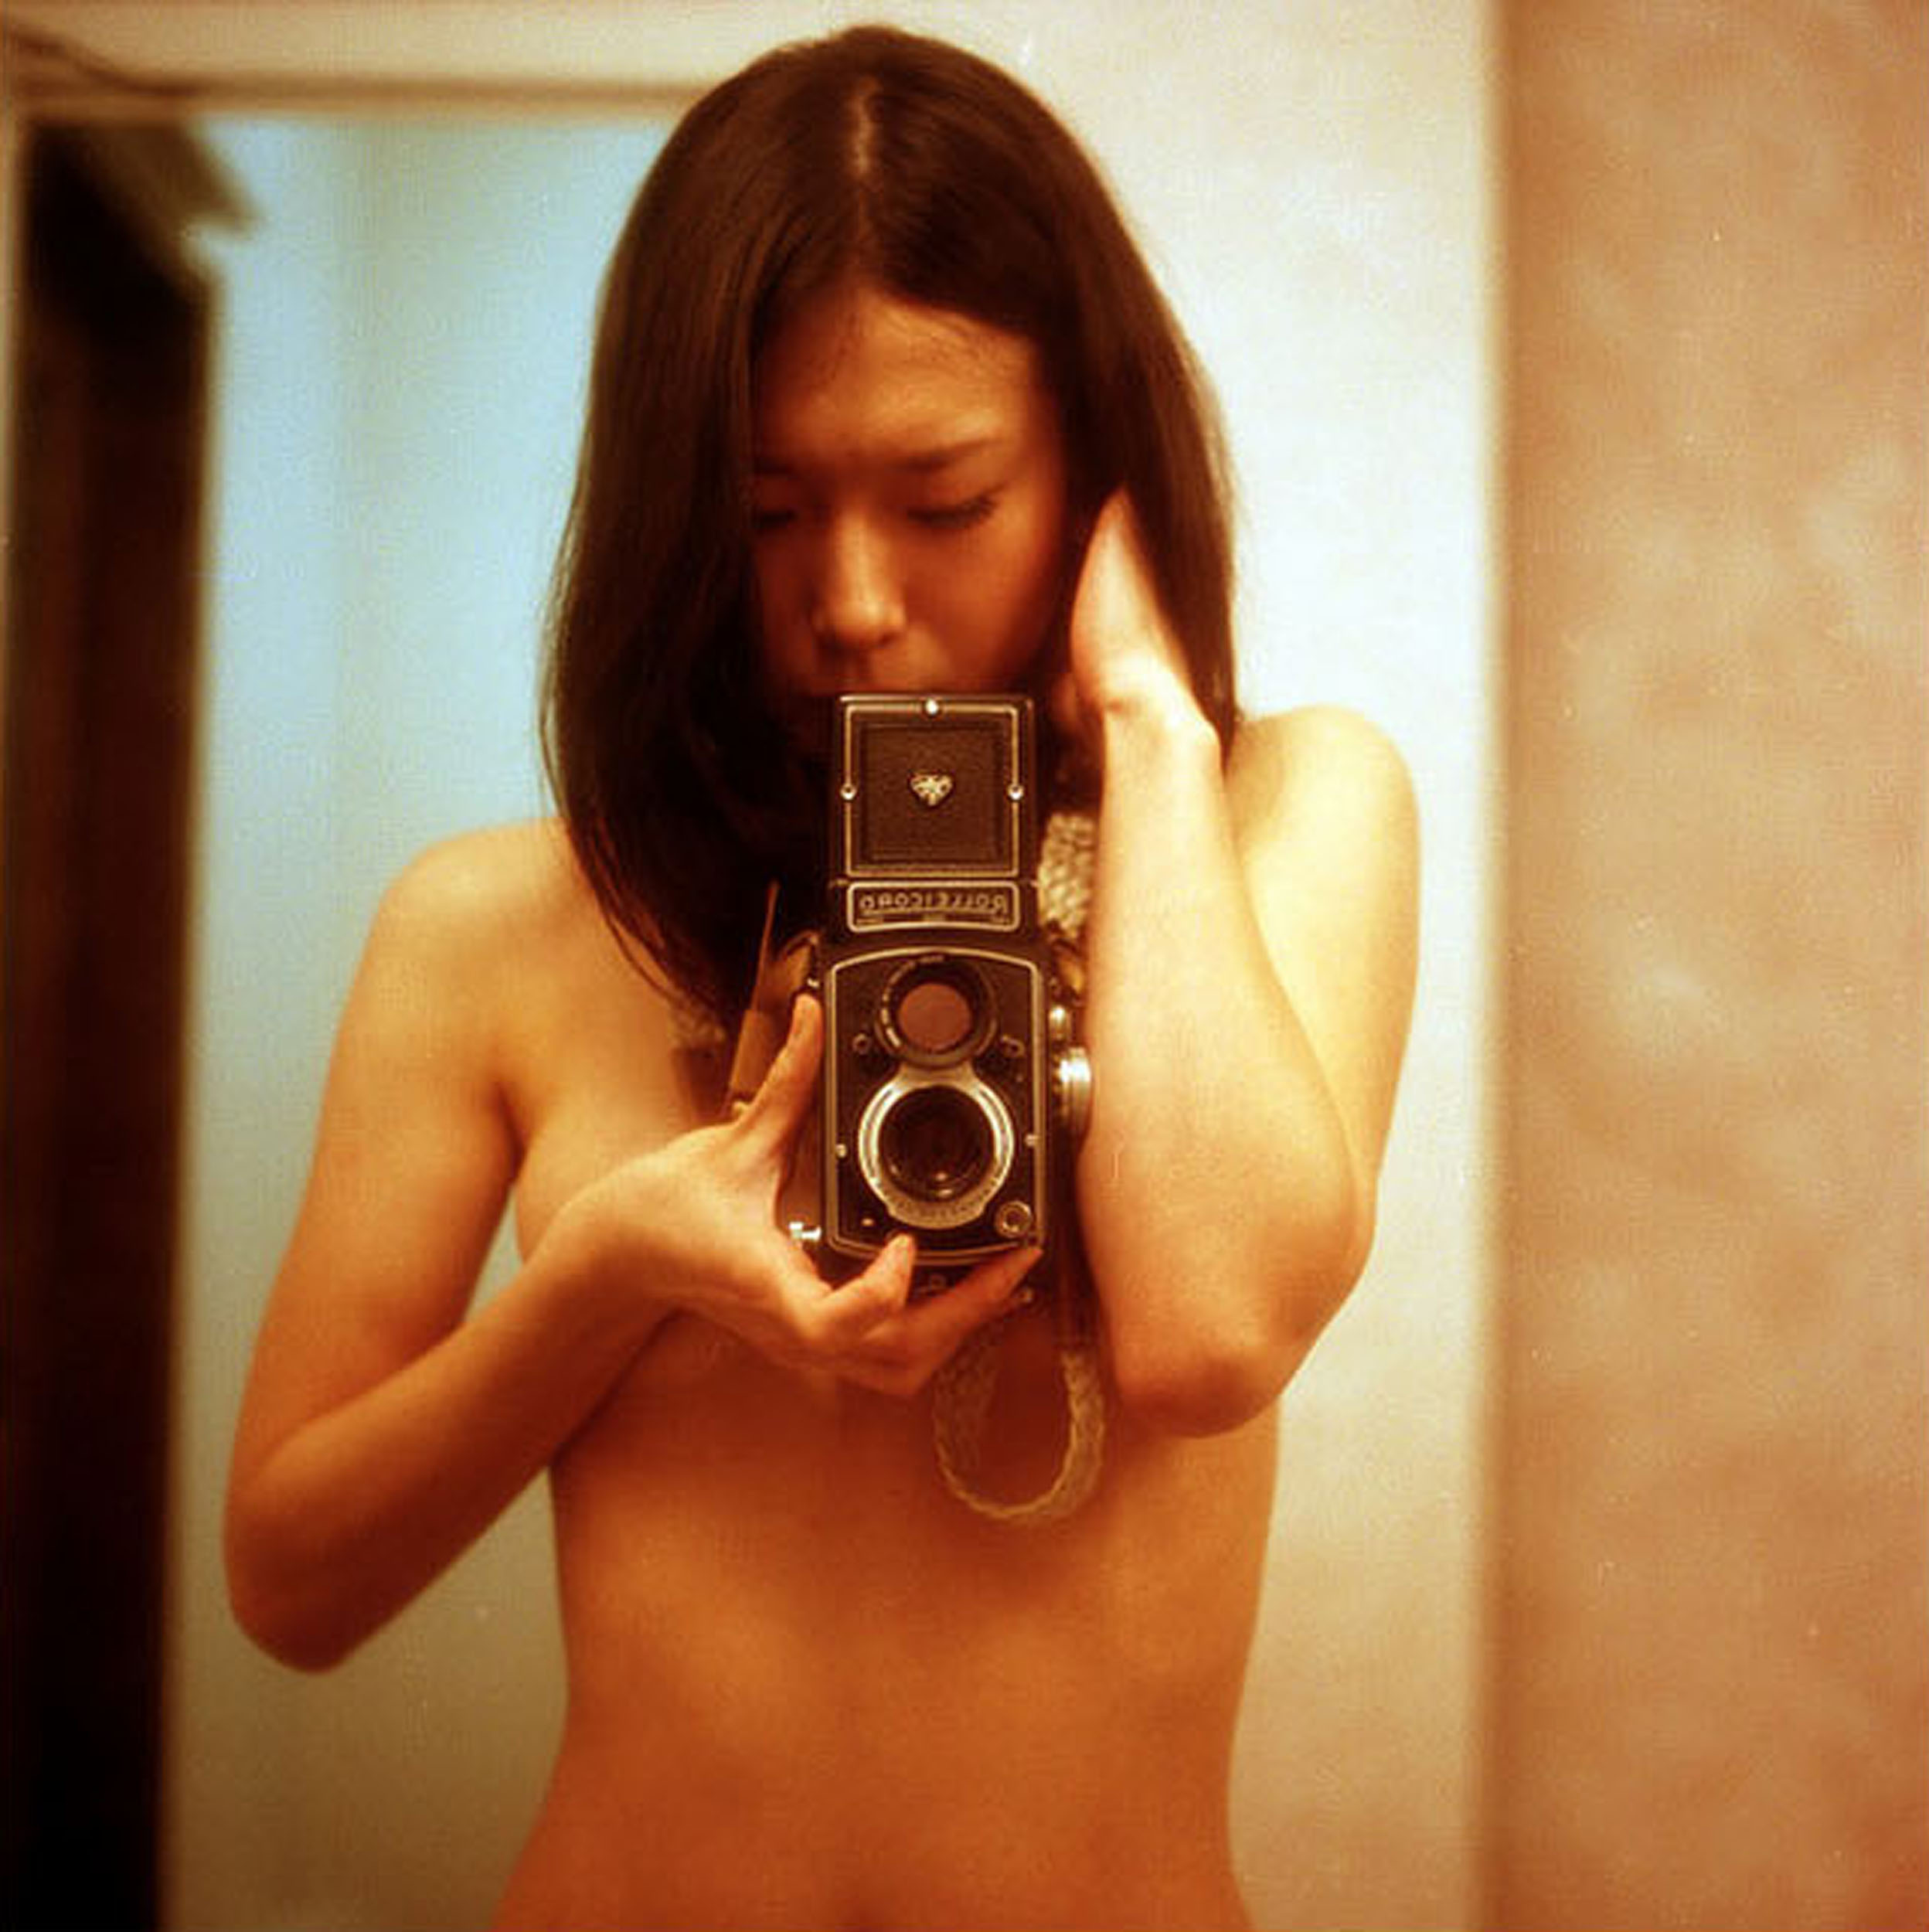 Hot Naked Girl Squatting Over Camera